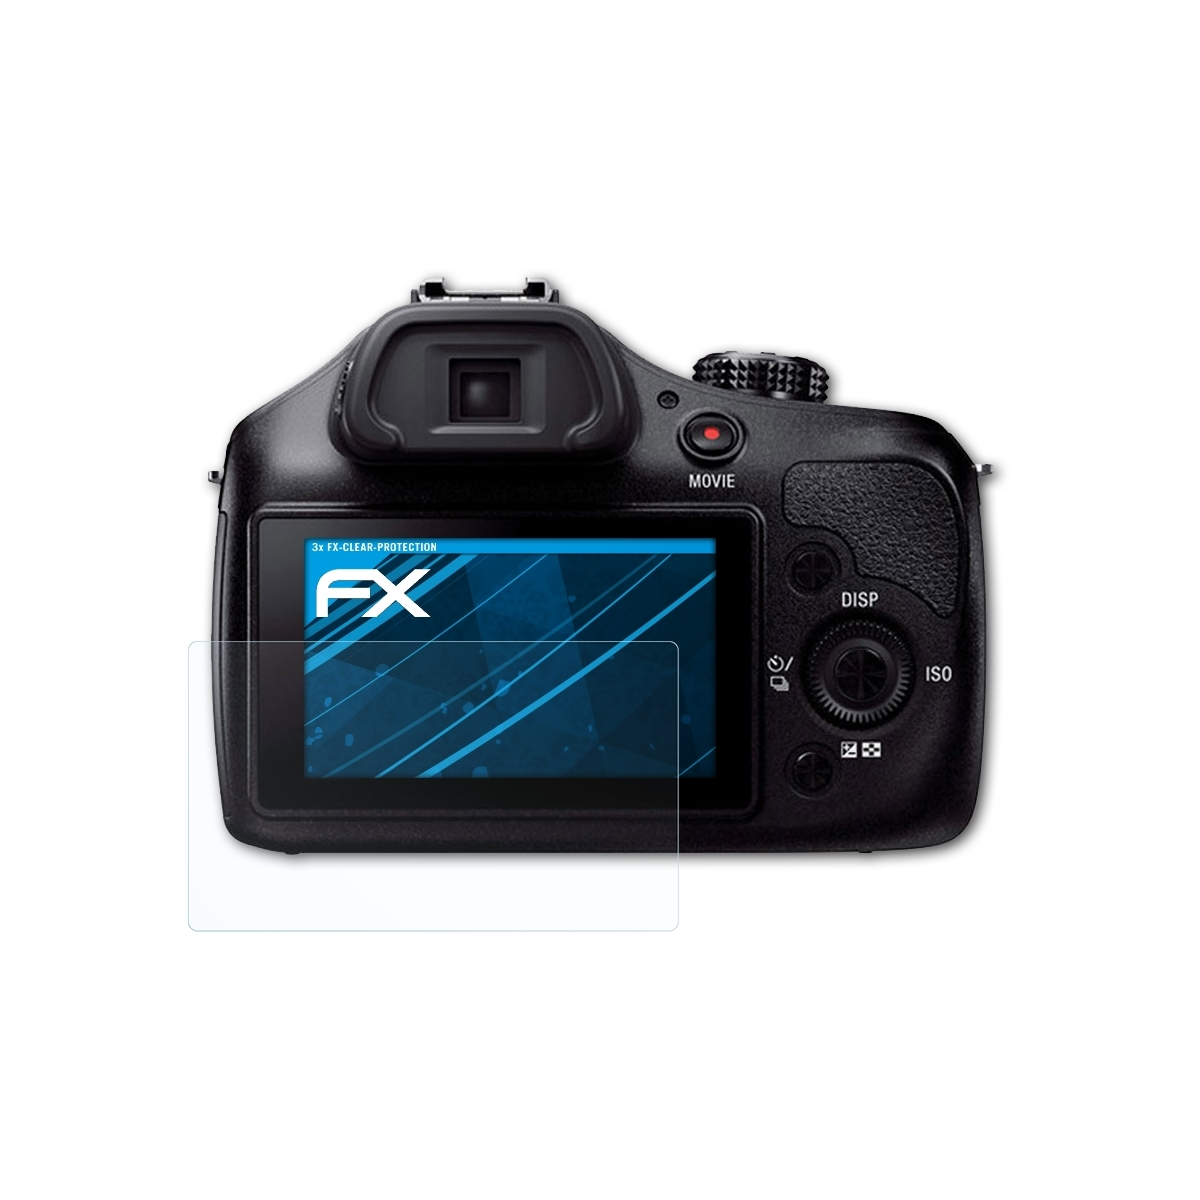 ATFOLIX 3x FX-Clear Displayschutz(für a3000 Alpha (ILCE-3000)) Sony